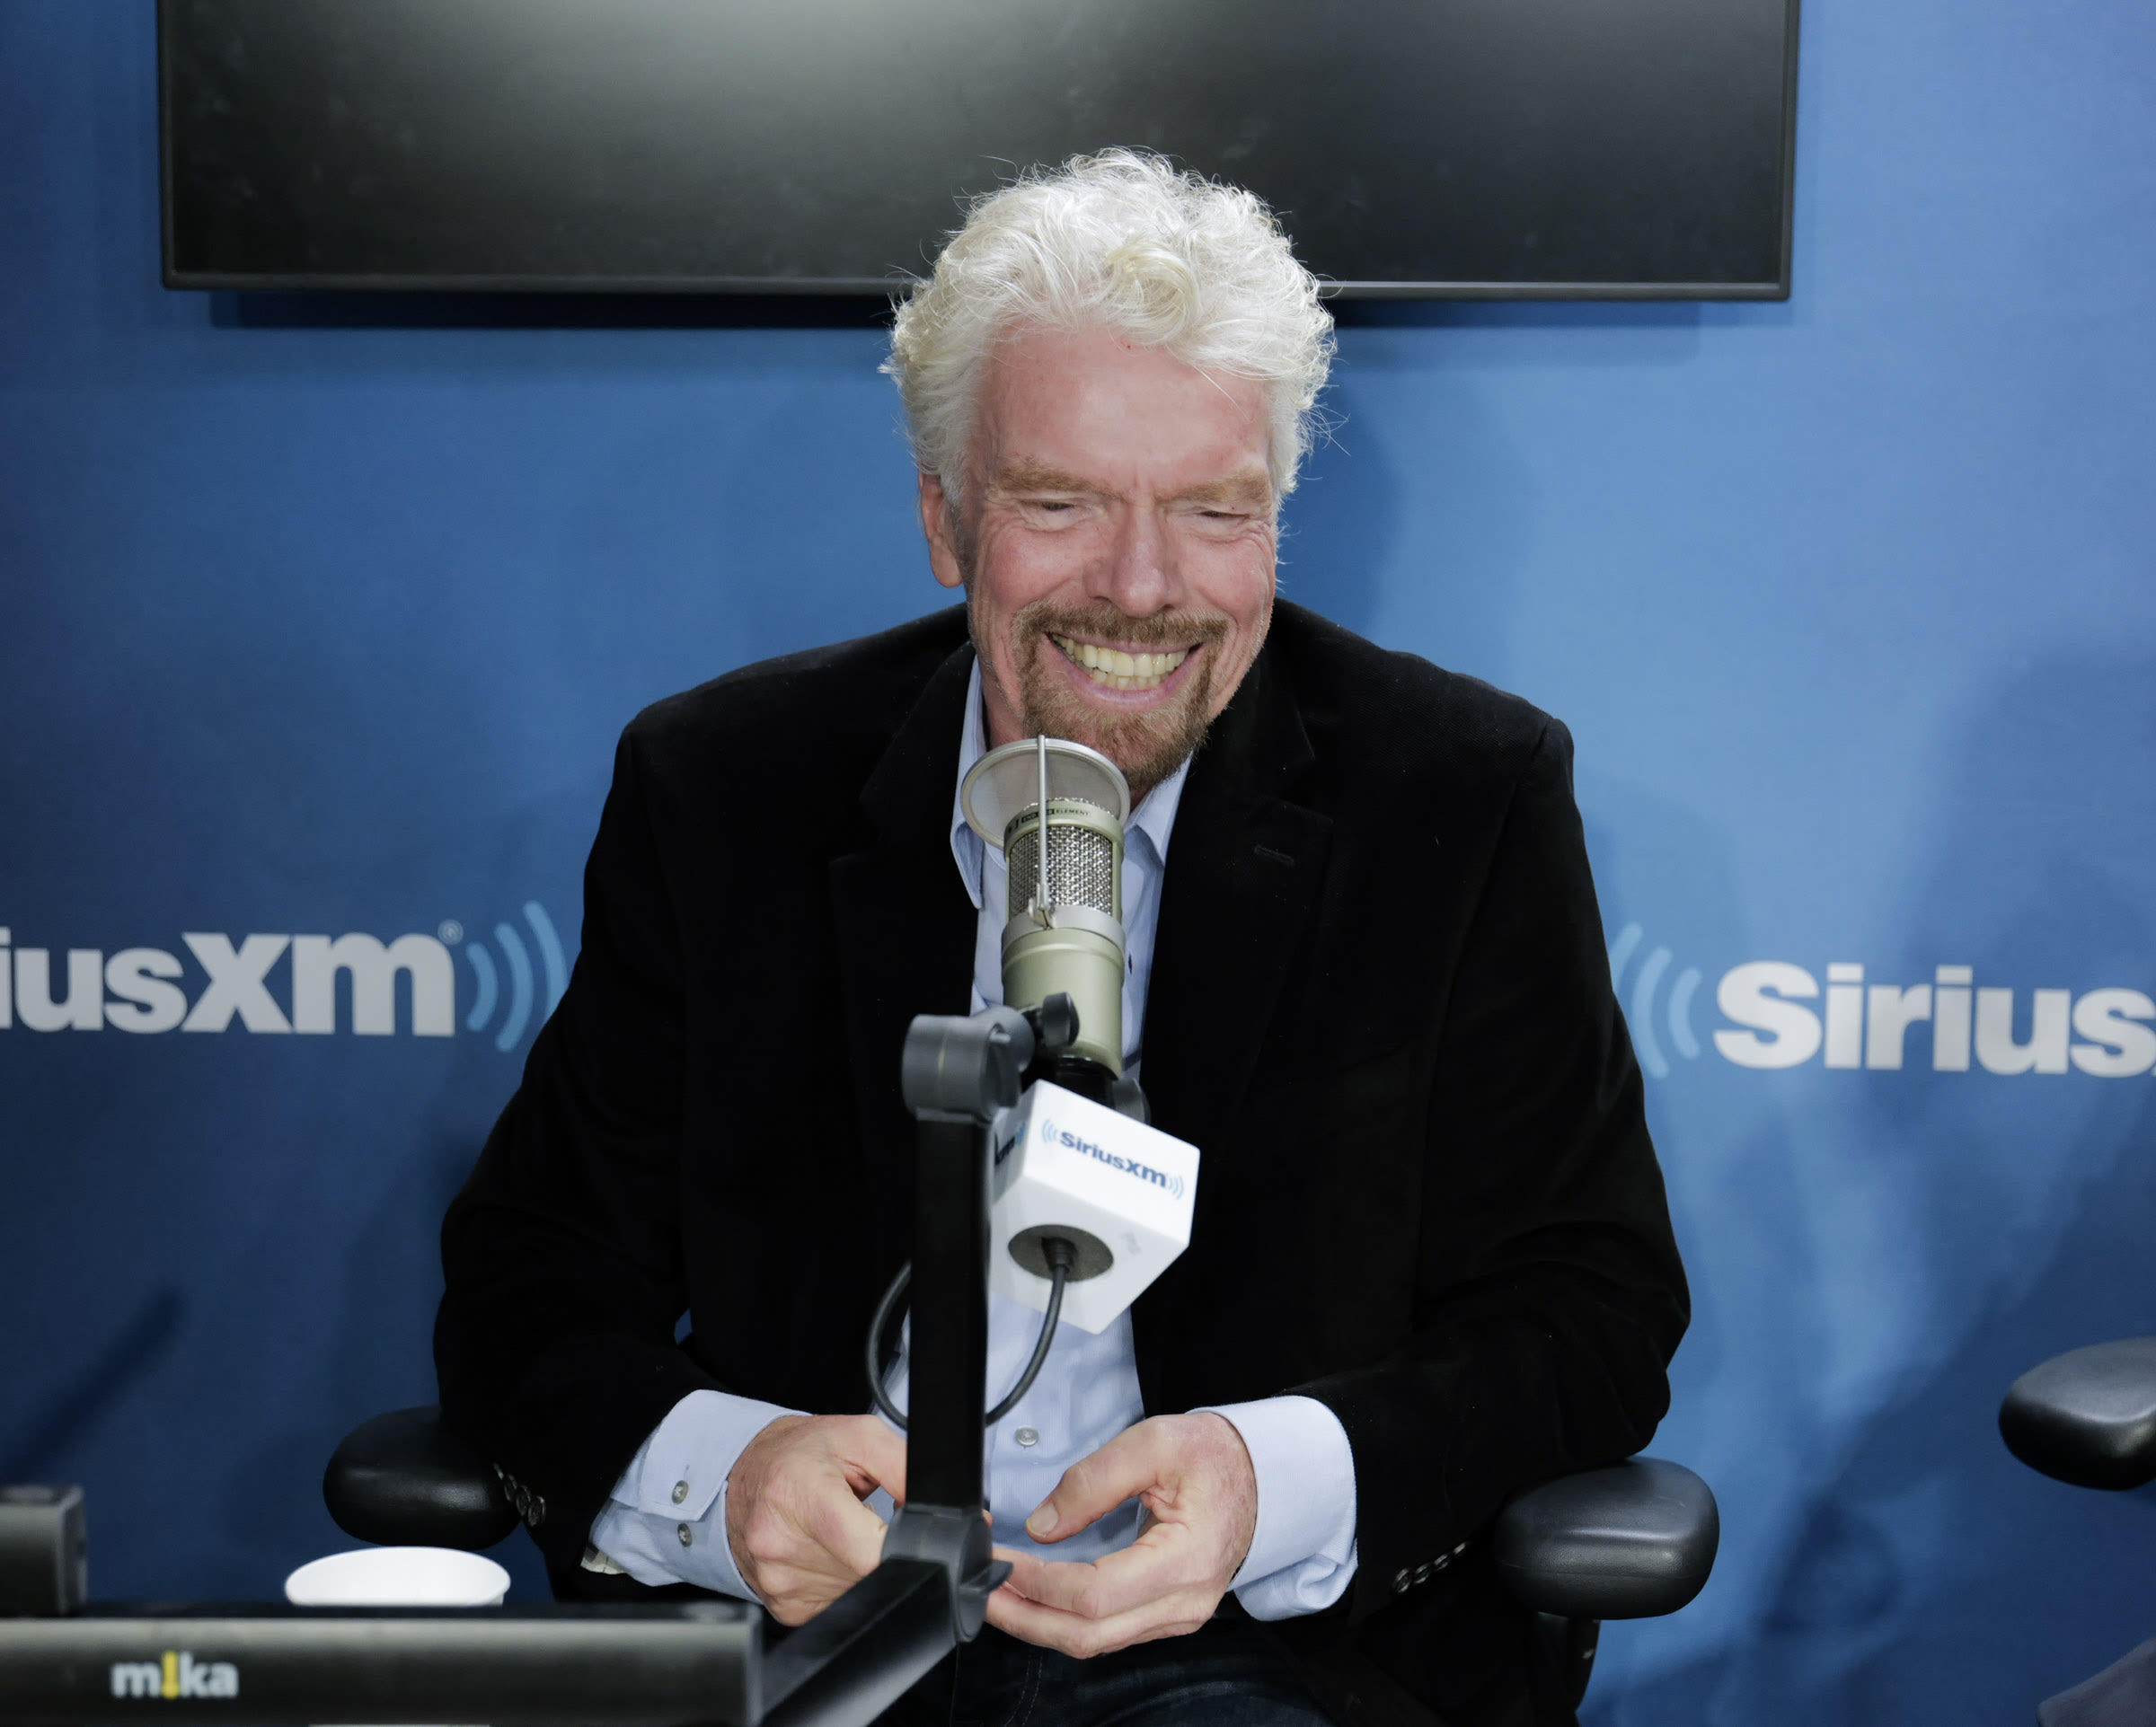 Richard Branson sat in the Sirius XM studio smiling